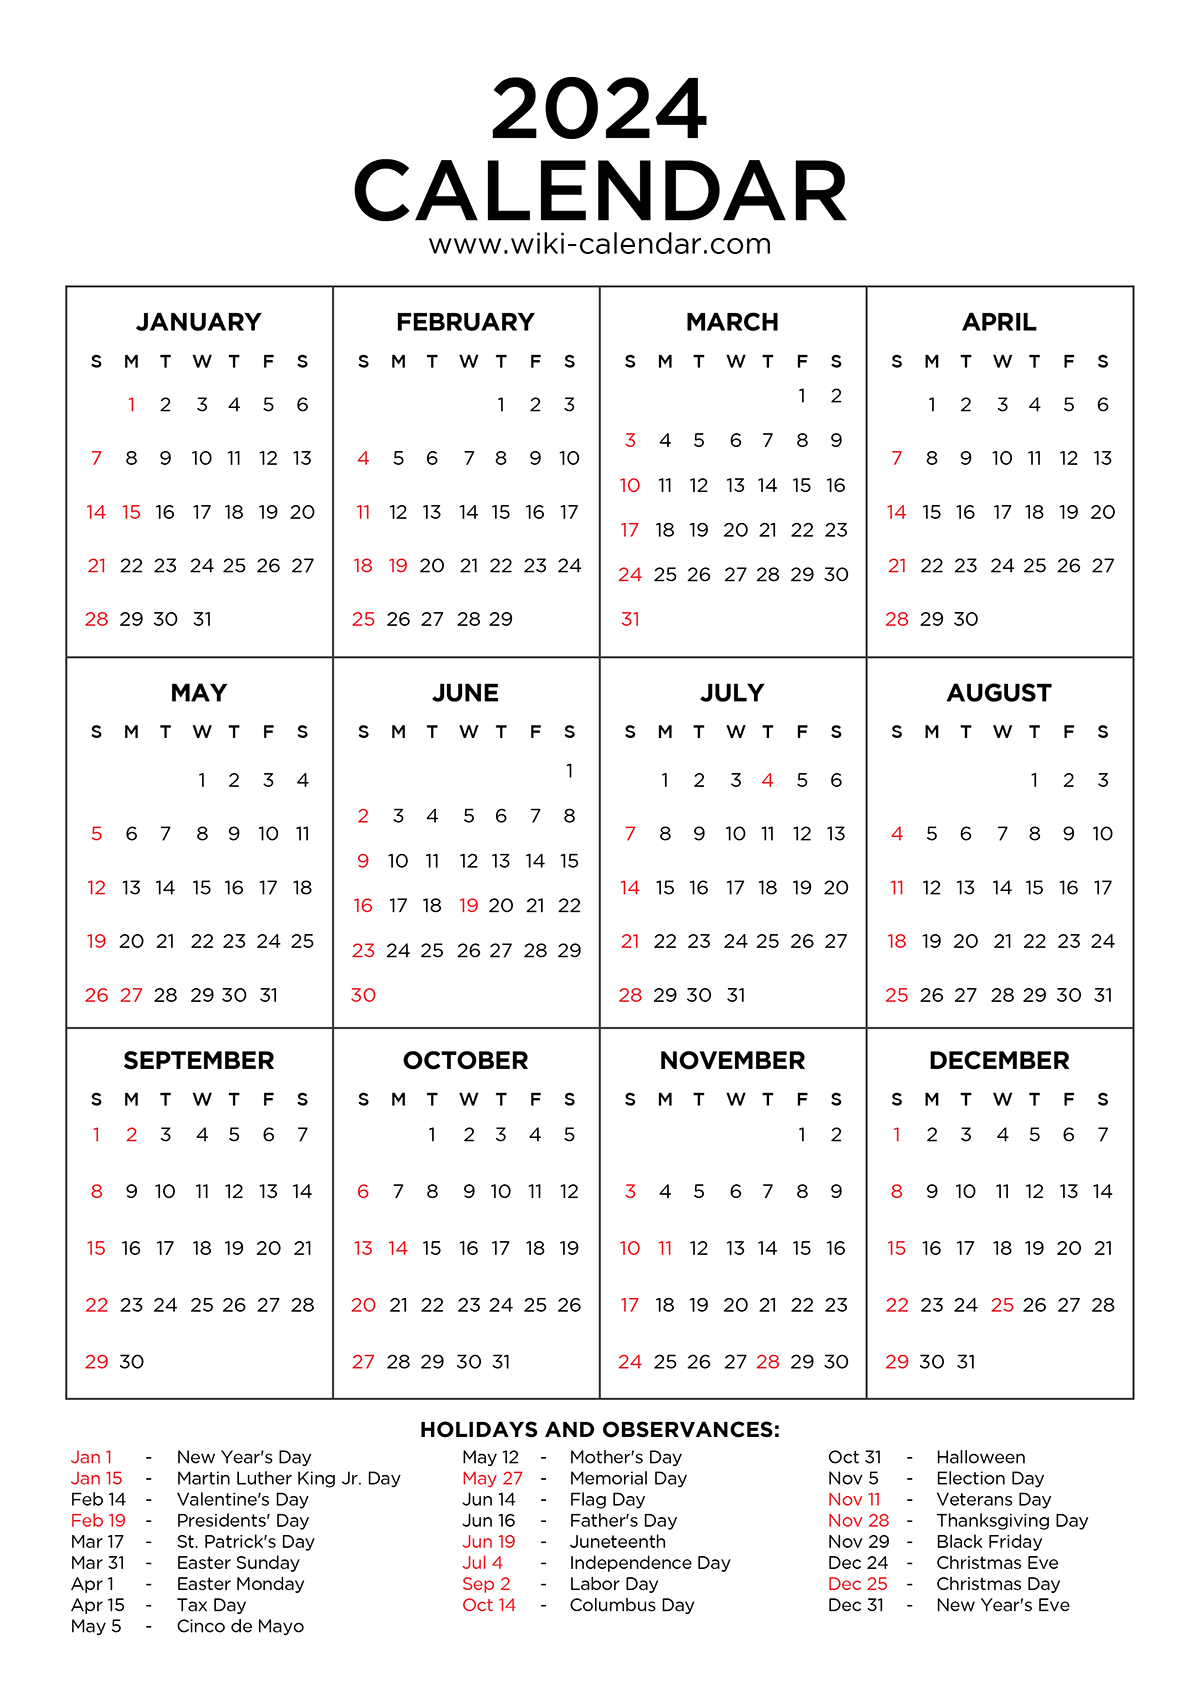 Year 2024 Calendar Printable With Holidays - Wiki Calendar pertaining to Free Printable Calendar 2024 Pictures